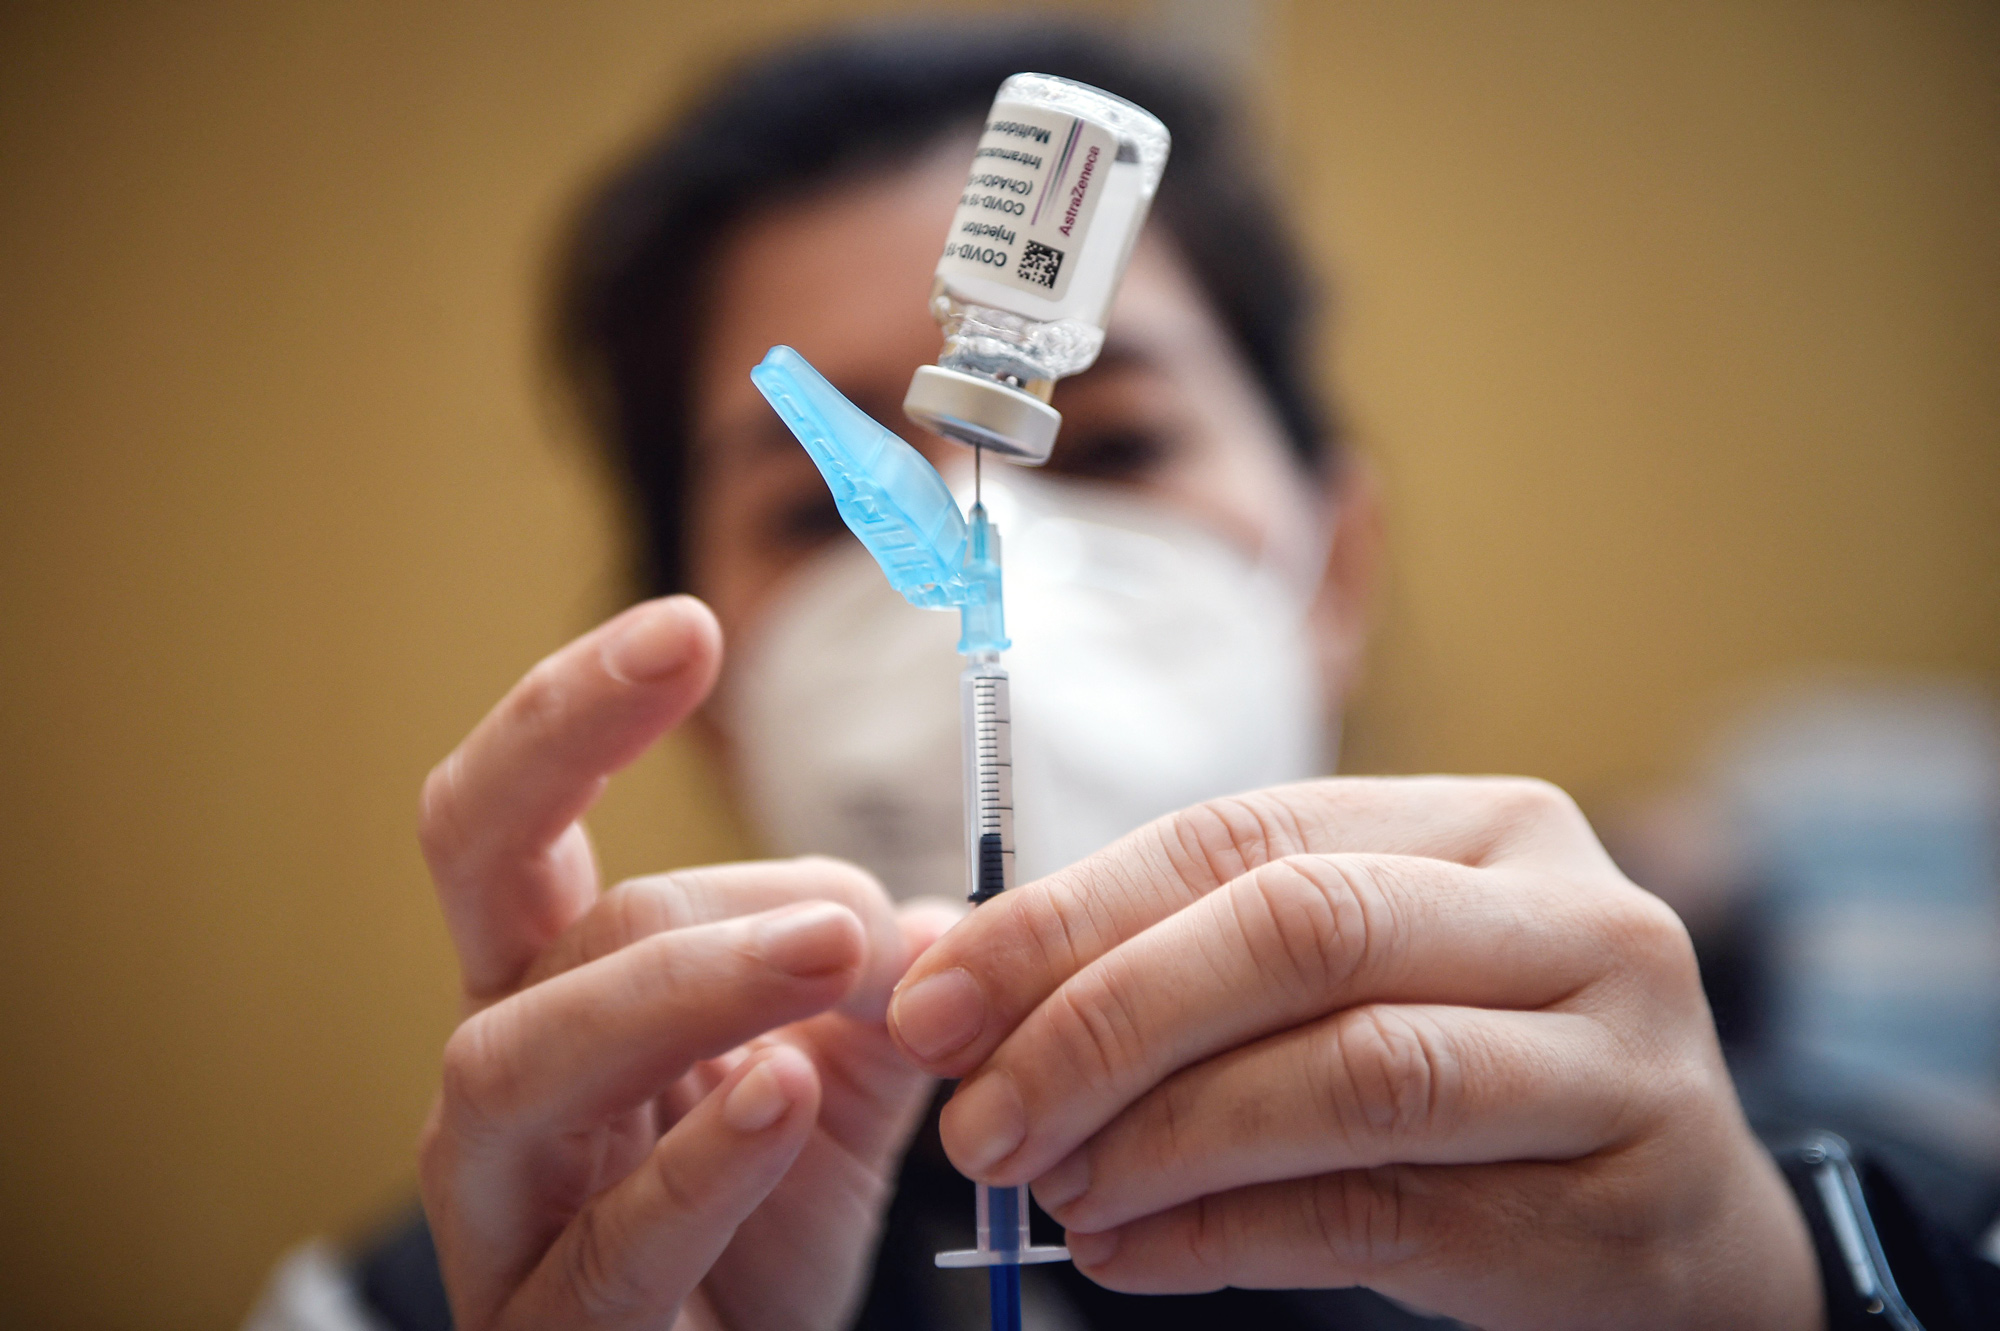 A healthcare worker prepares an AstraZeneca Covid-19 vaccine shot in Vigo, Spain, on March 13.